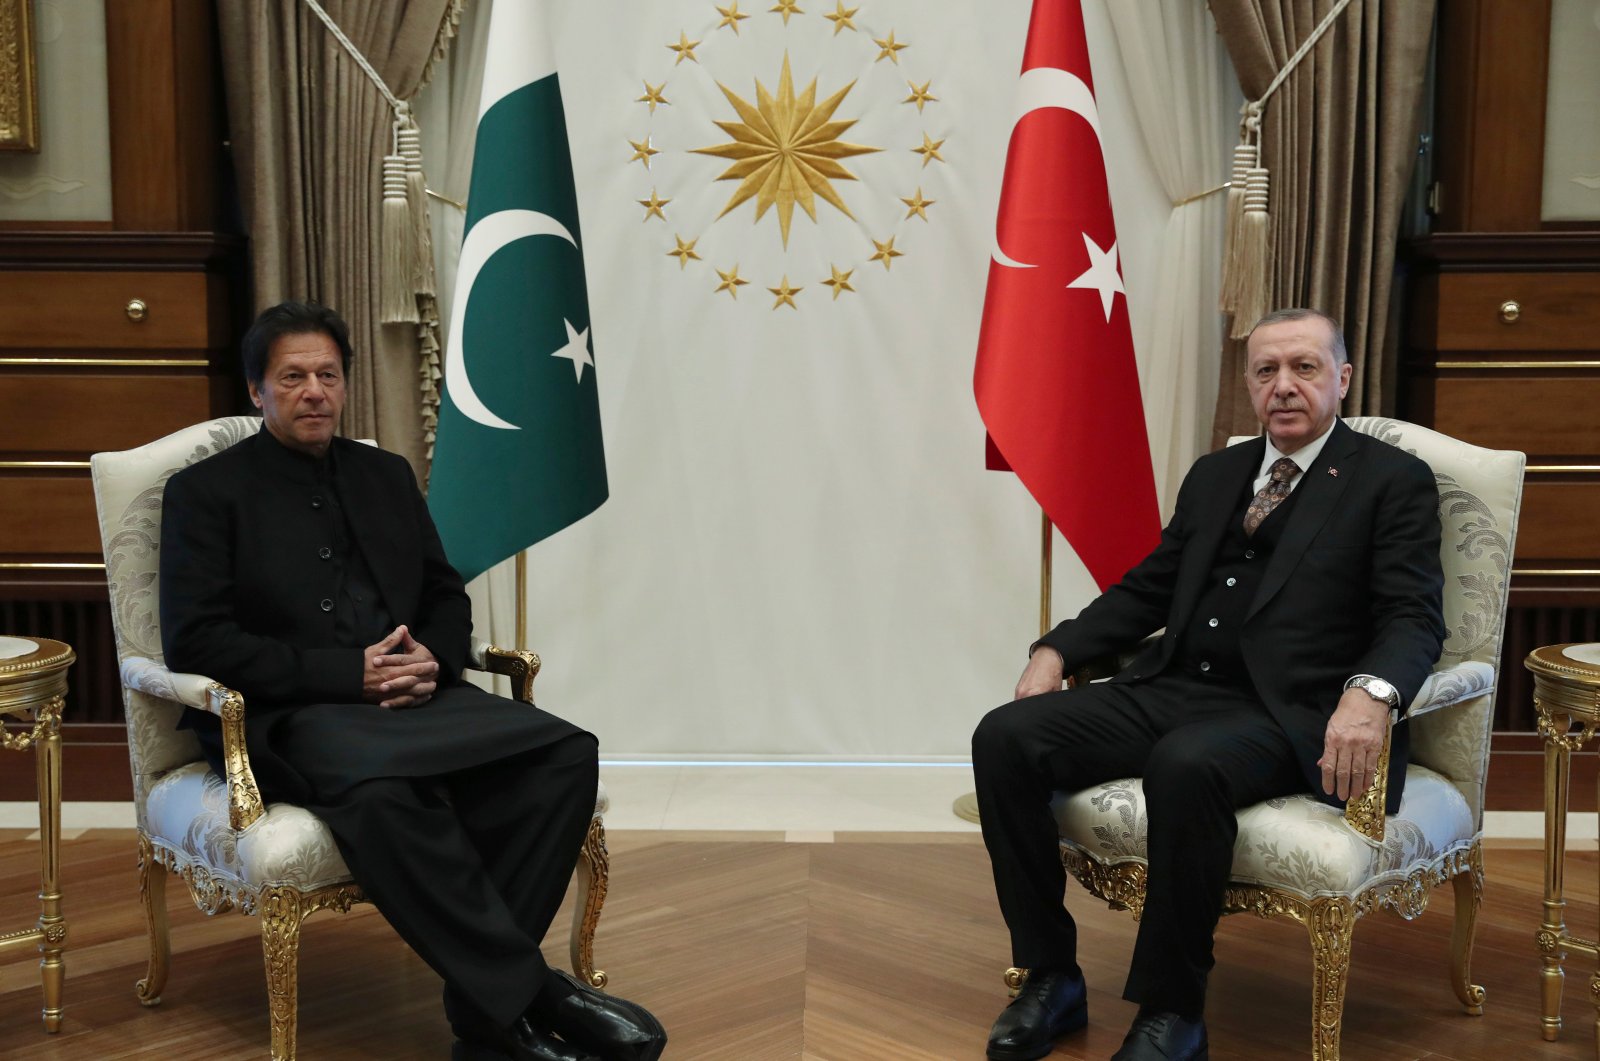 Pakistan's Prime Minister Imran Khan (L) and President Recep Tayyip Erdoğan pose for the media before a meeting, Ankara, Jan. 4, 2019. (AP Photo)